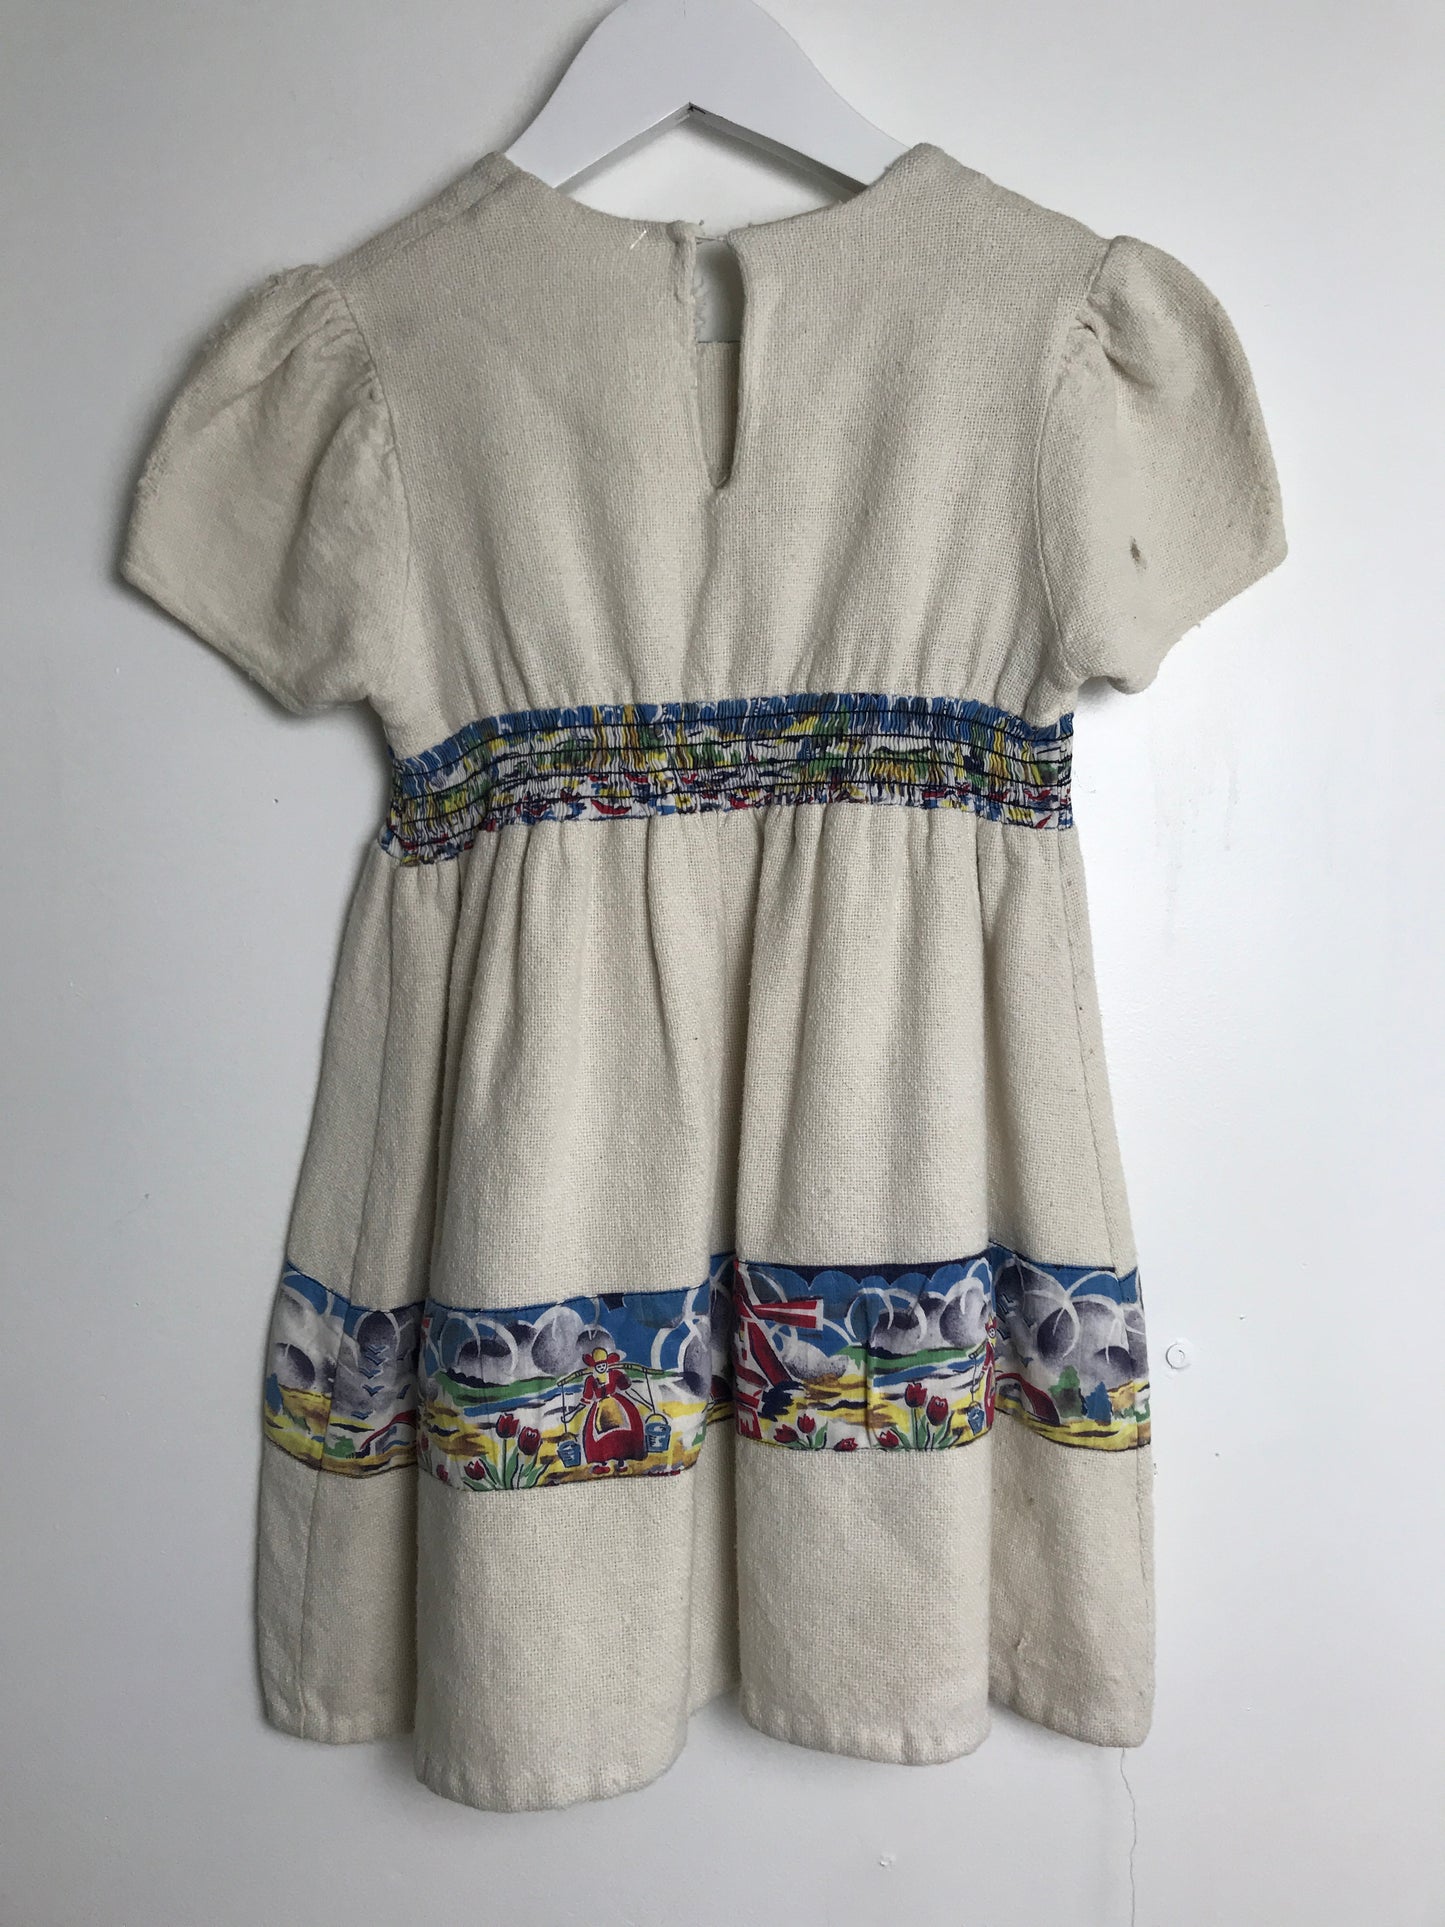 1940s Girls Linen Day Dress (3-4T)